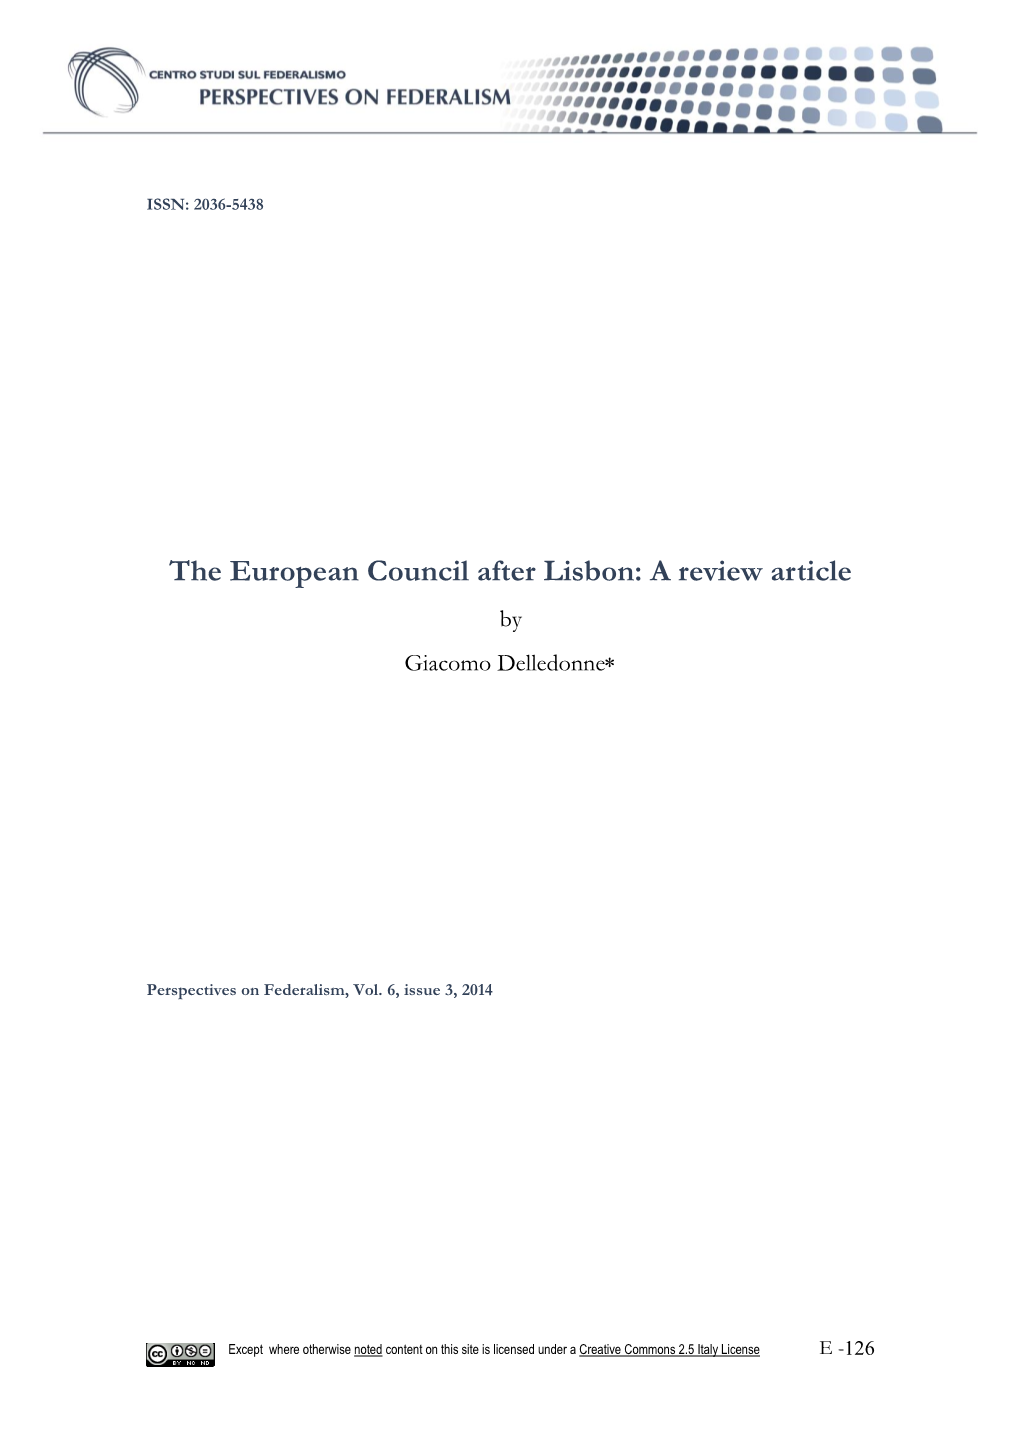 The European Council After Lisbon: a Review Article by Giacomo Delledonne